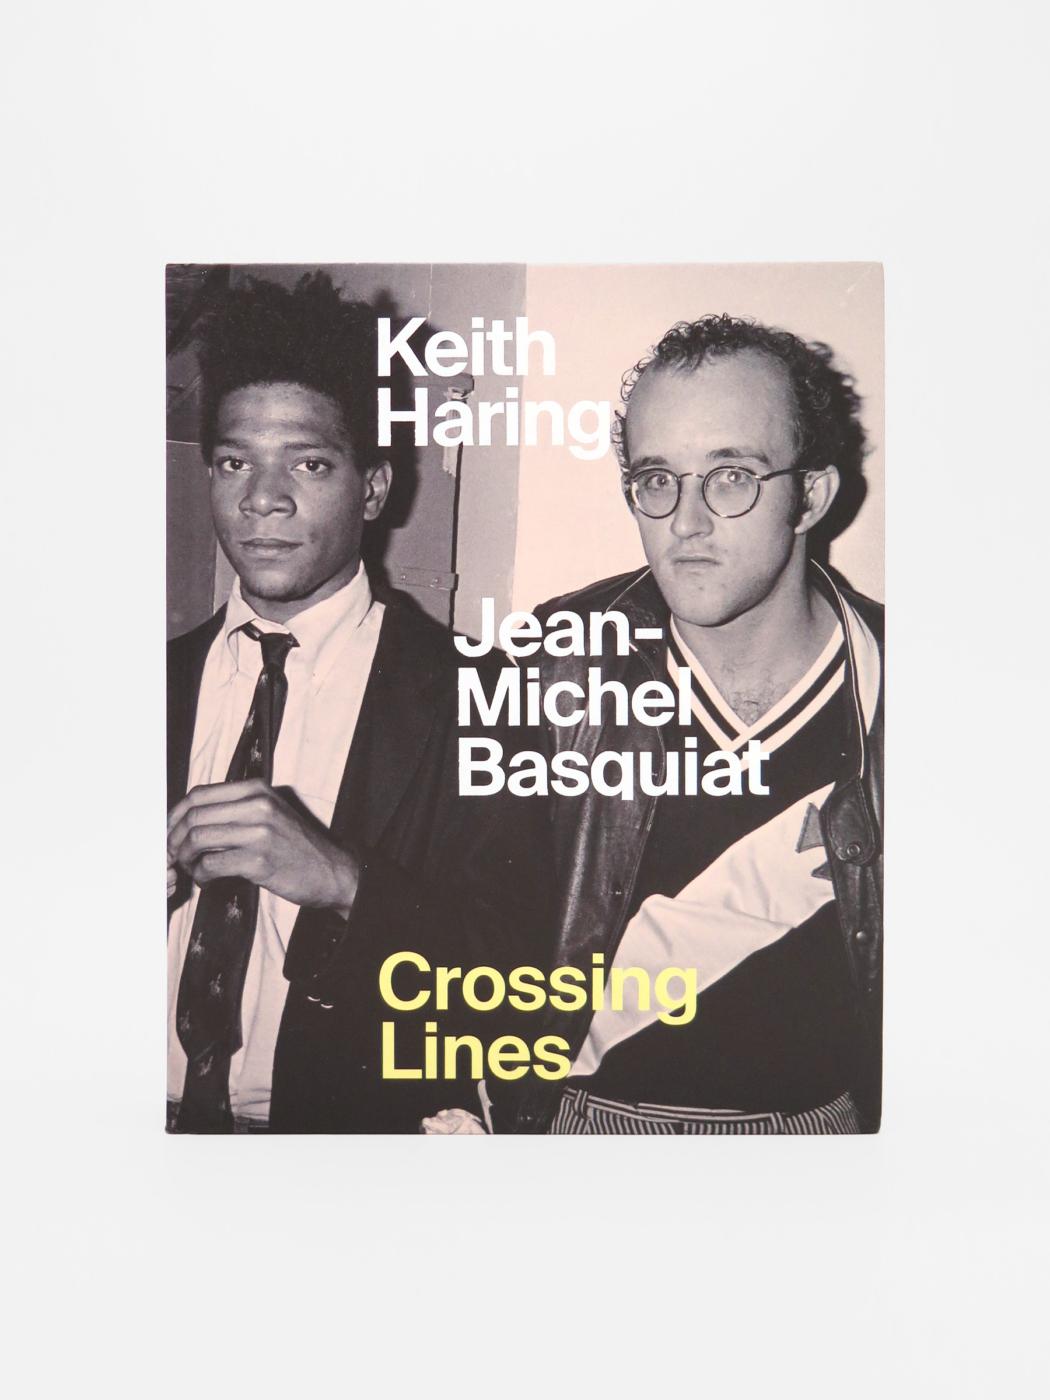 Keith Haring, Jean-Michel Basquiat, Crossing Lines